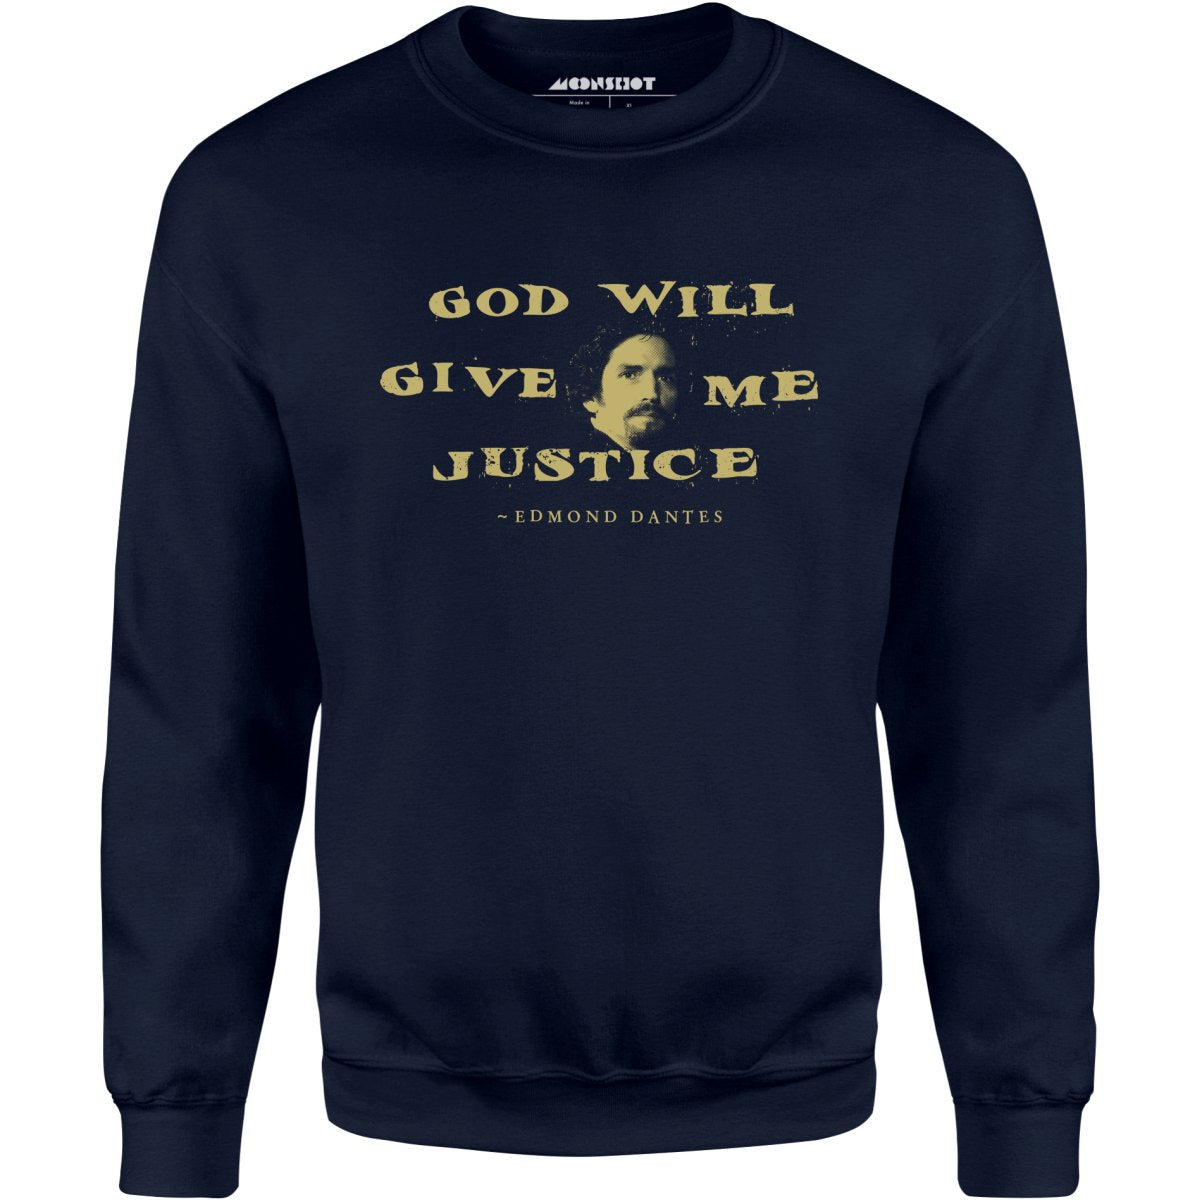 Edmond Dantes - God Will Give Me Justice - Unisex Sweatshirt